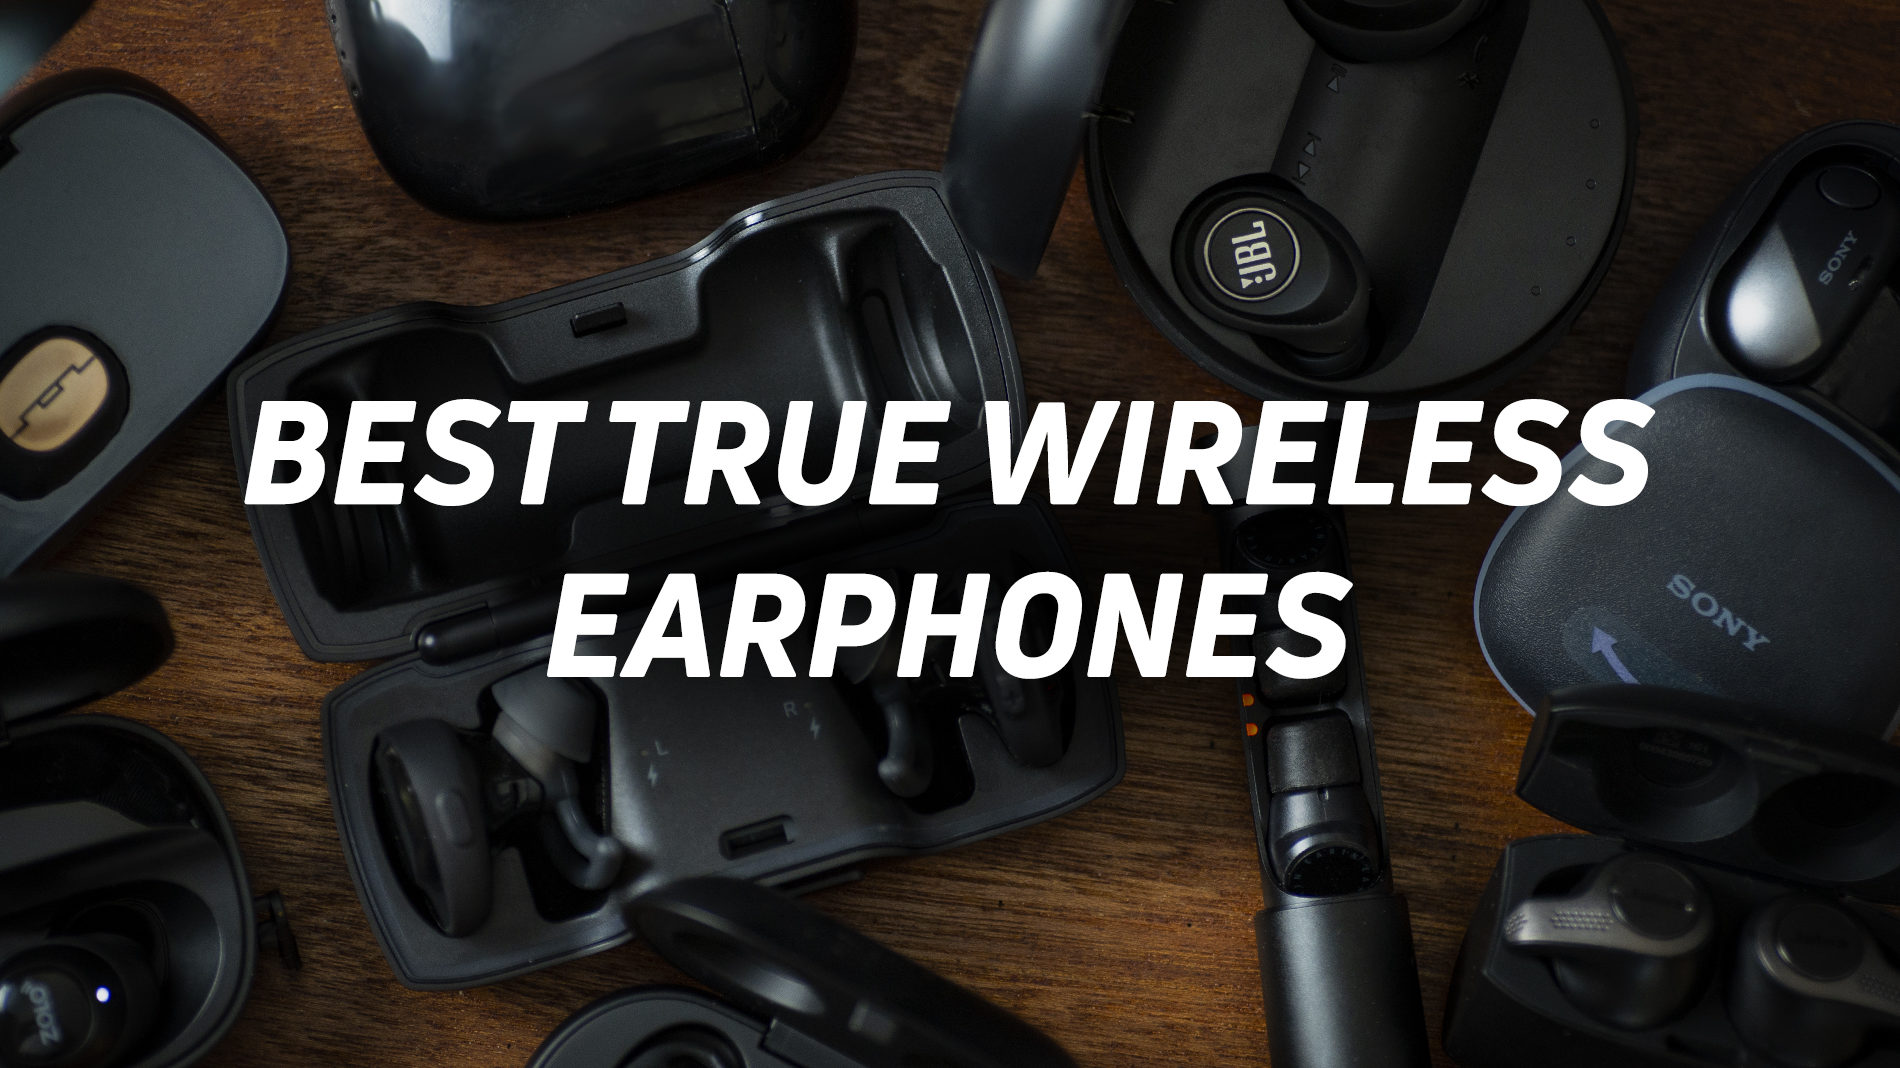 Several pairs of true wireless earphones overlaid with the text "best true wireless earphones."